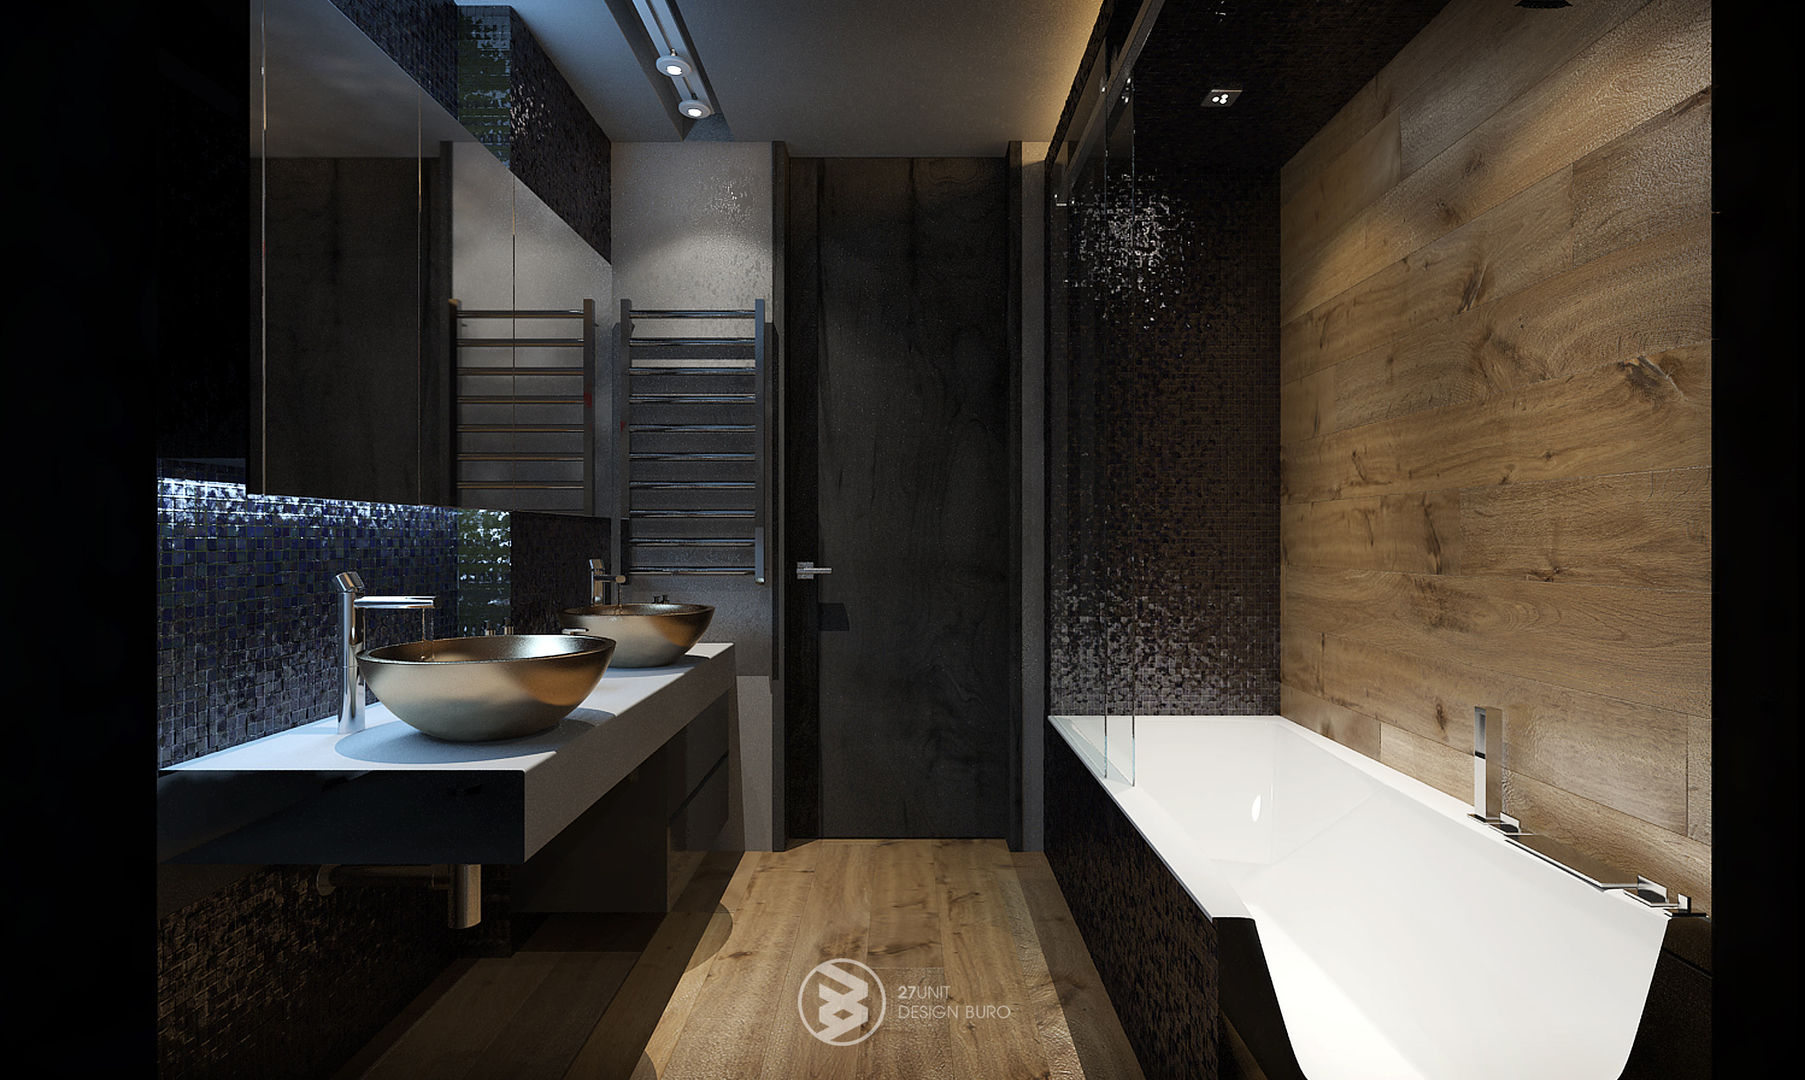 Квартира в Броварах 2, 27Unit design buro 27Unit design buro Eclectic style bathroom